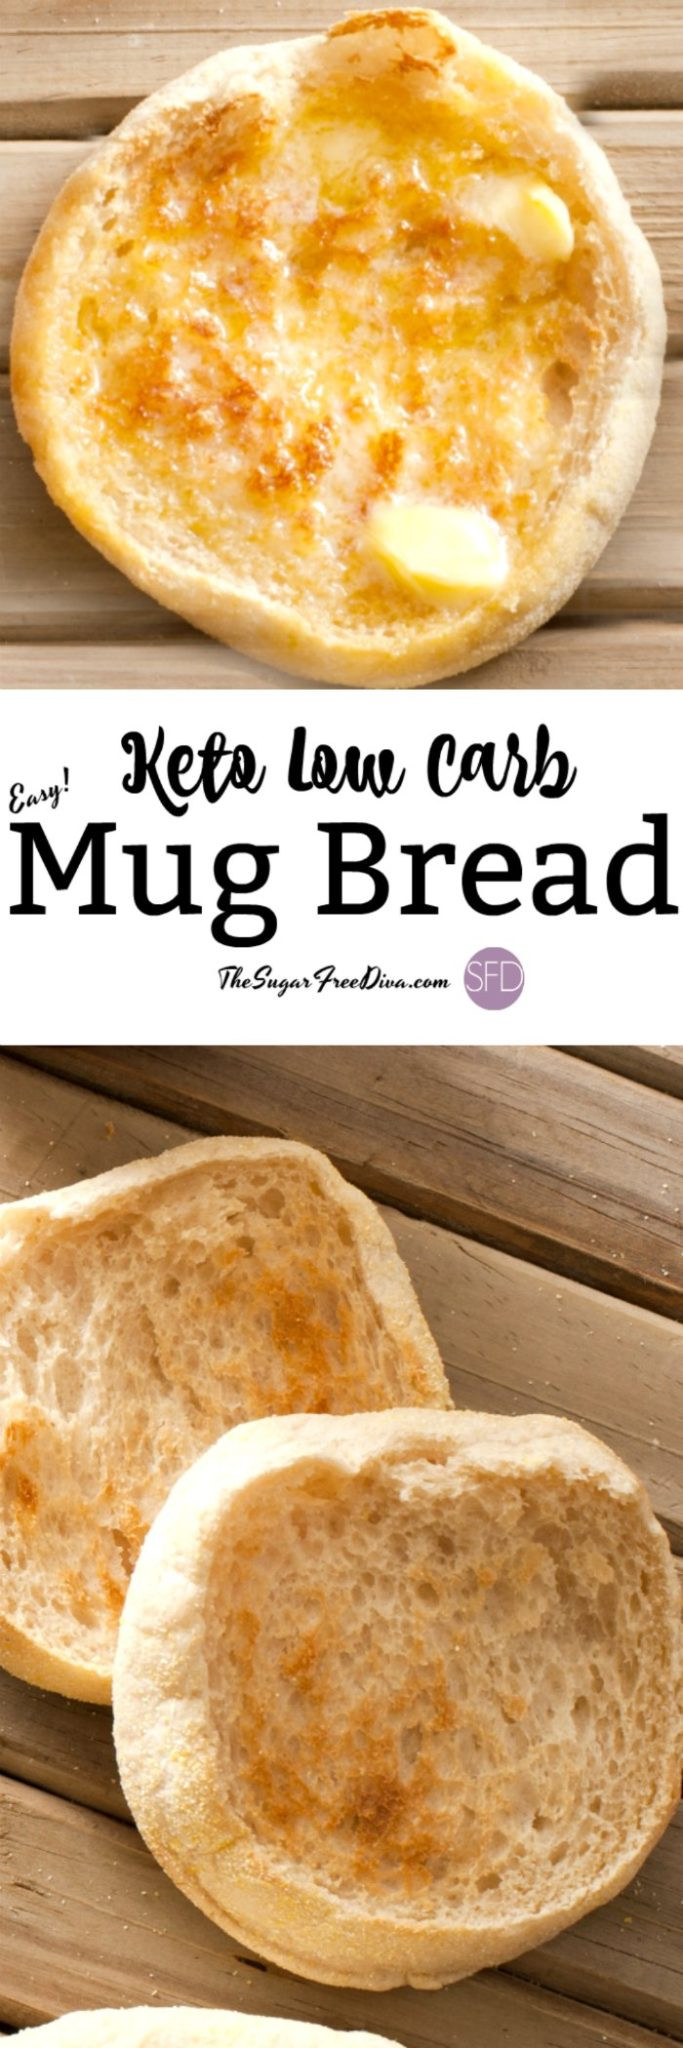 Keto Bread Crumbs Low Carb
 Easy and Yummy Keto Low Carb Mug Bread Recipe